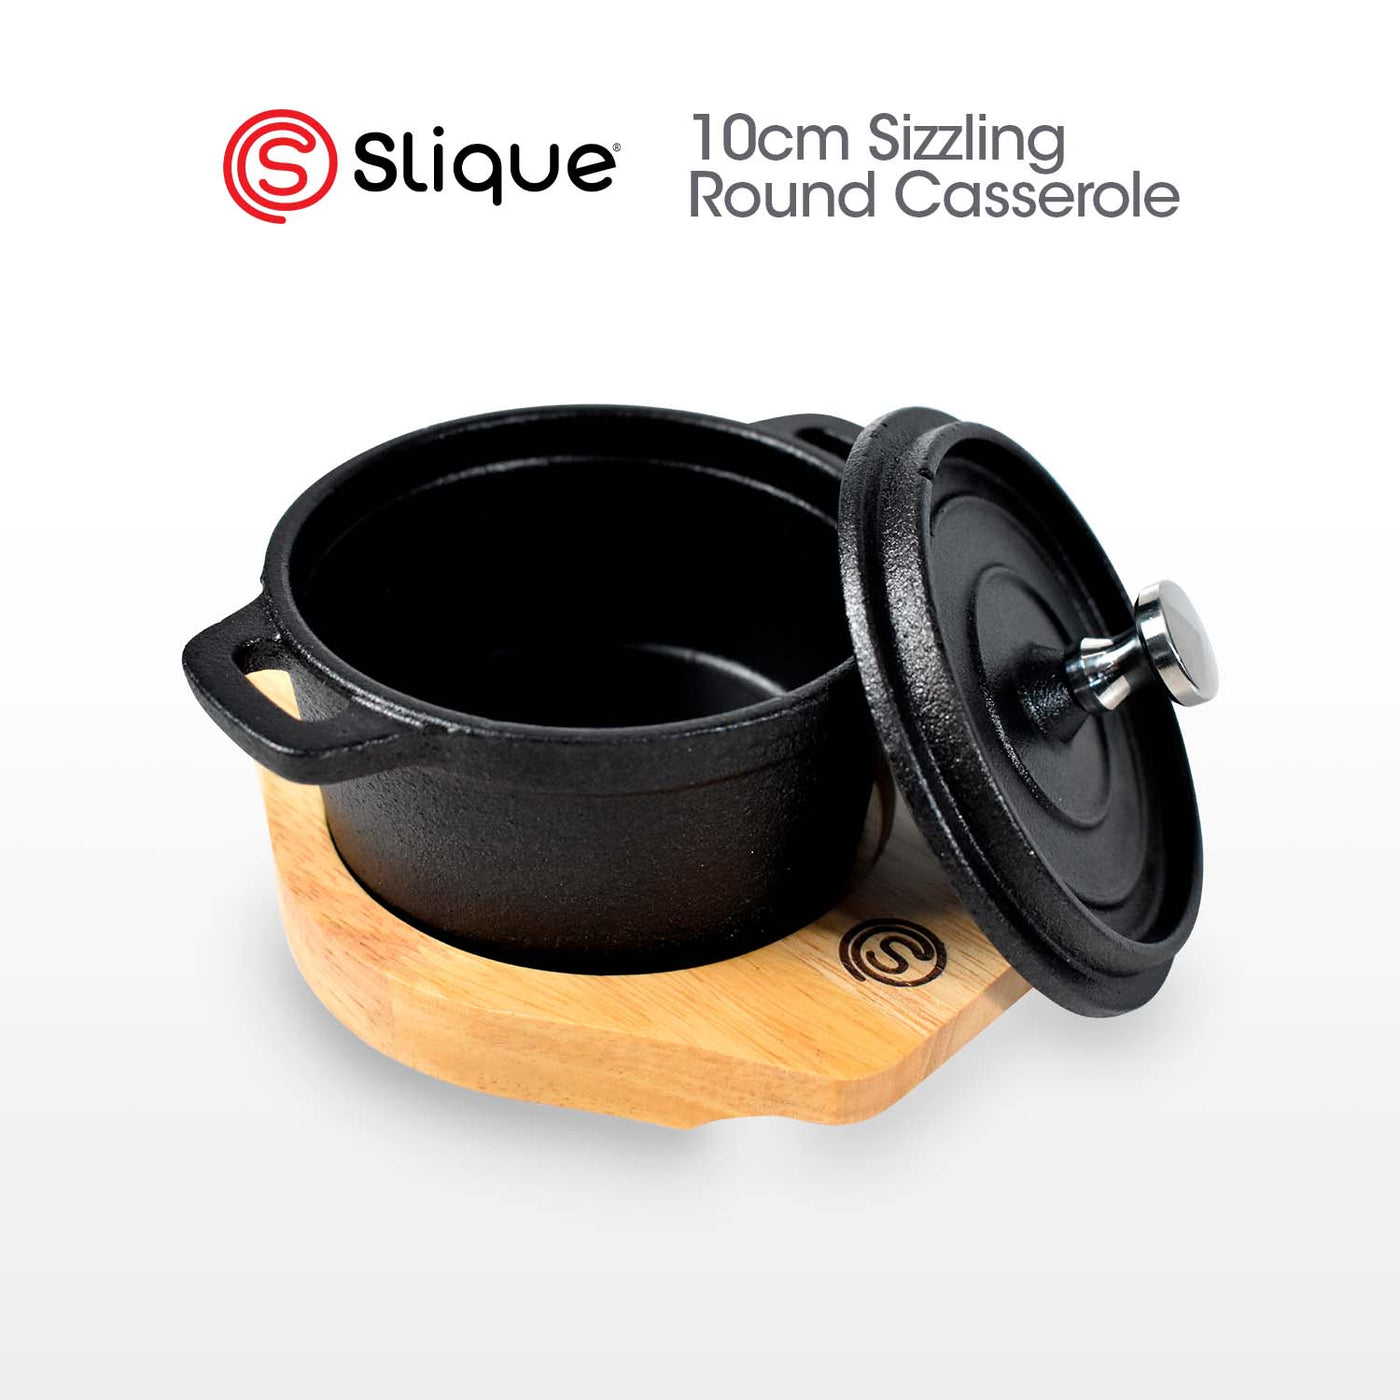 SLIQUE Premium Cast Iron Round Sizzling Casserole w/ Original Rubber Wood Base 10cm